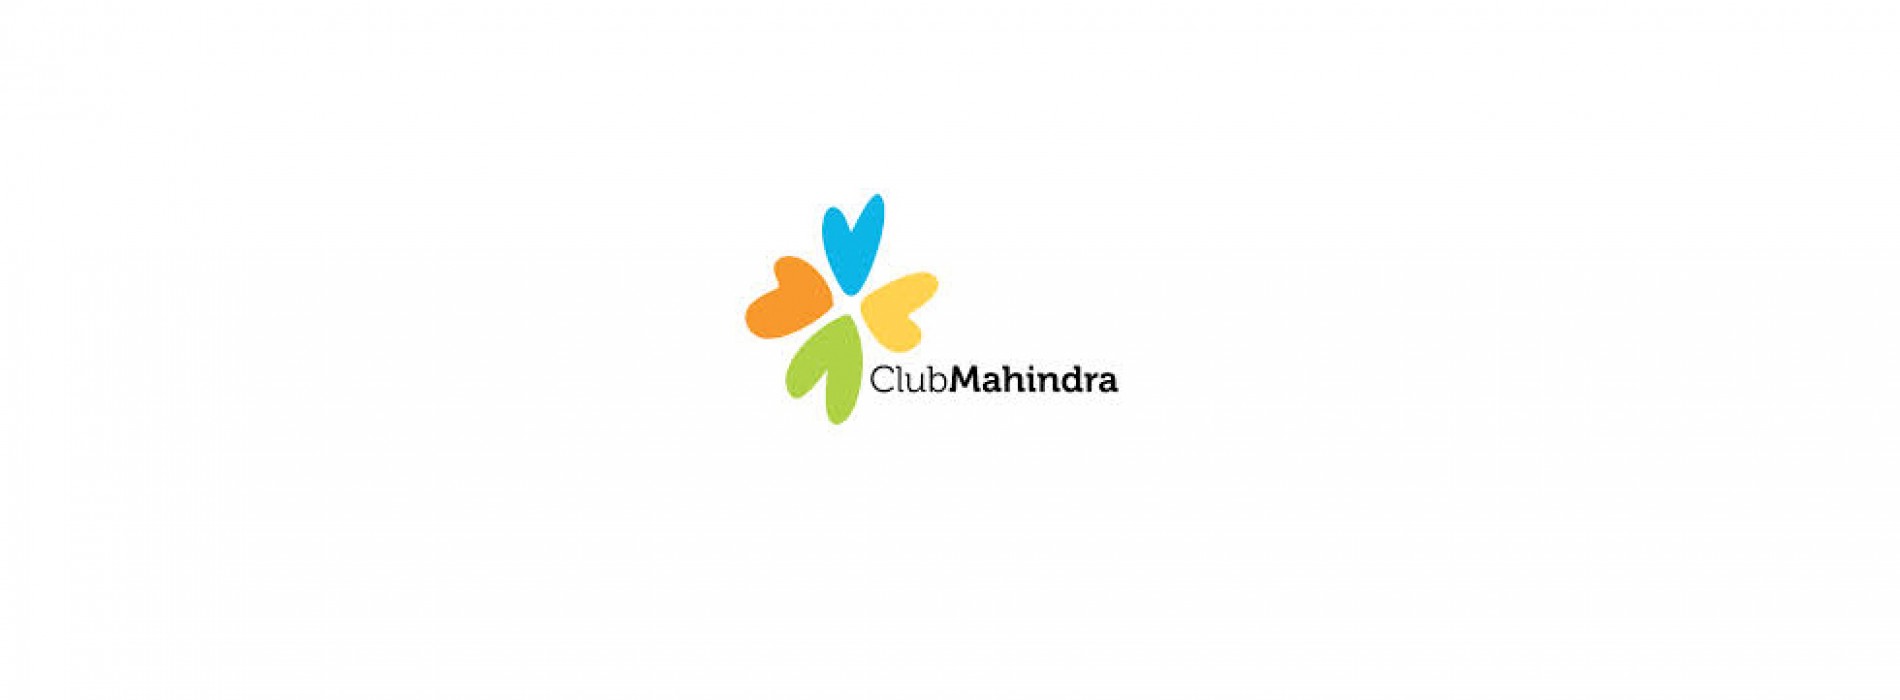 Mahindra holidays to celebrate World Senior Citizen Day